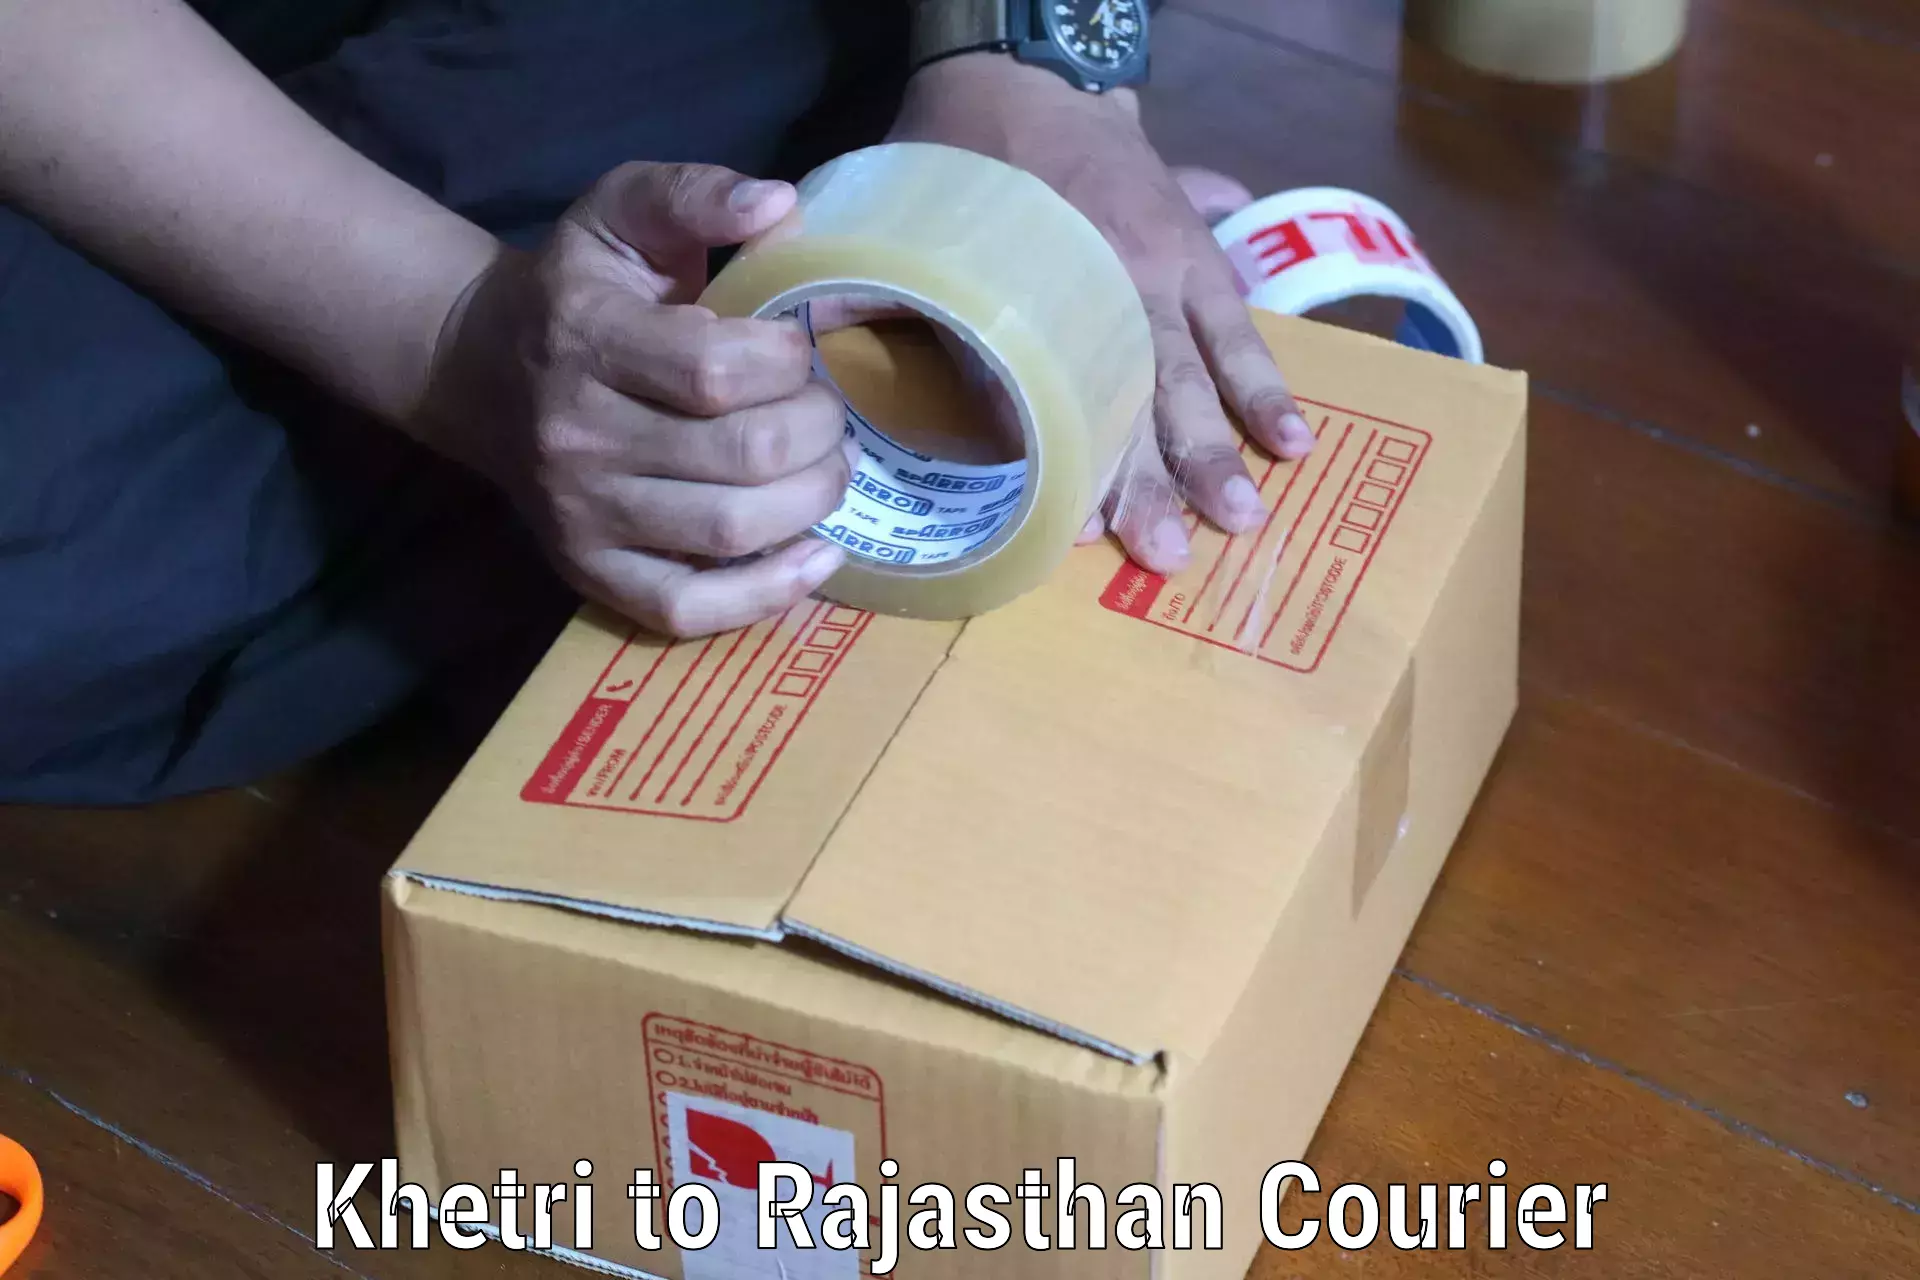 Courier service comparison Khetri to Paota